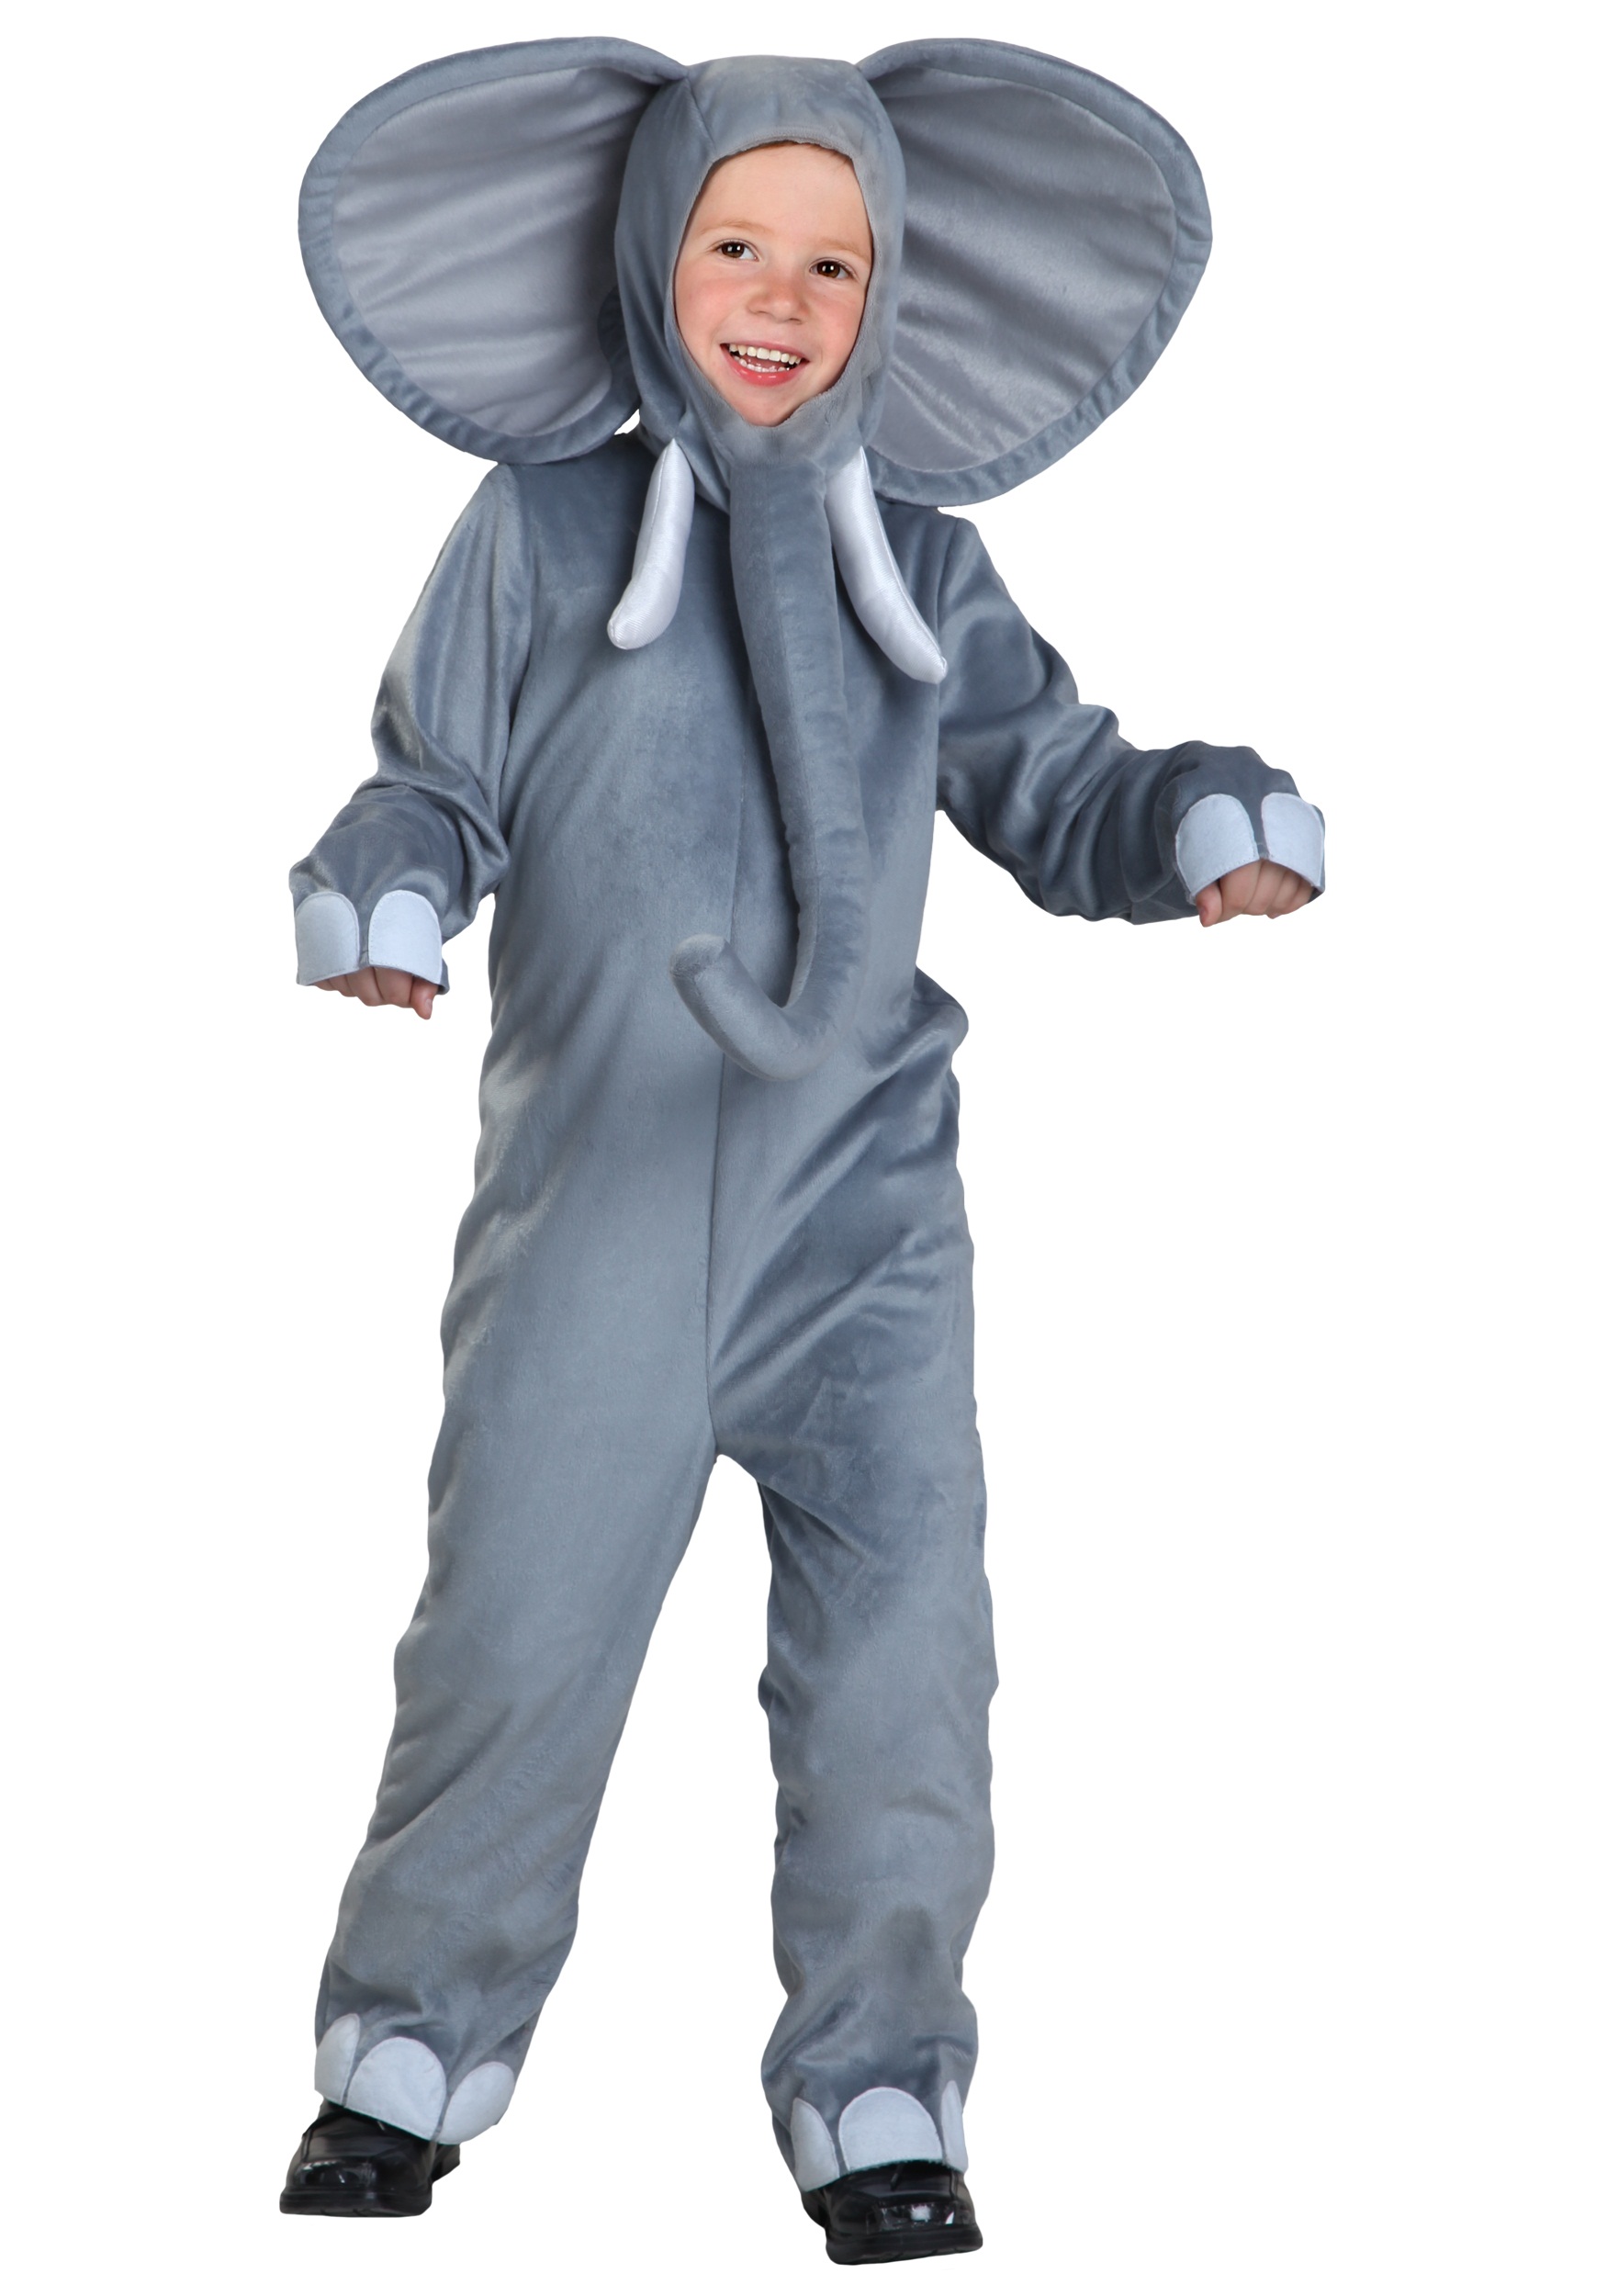 Photos - Fancy Dress Toddler FUN Costumes  Elephant Costume Gray 